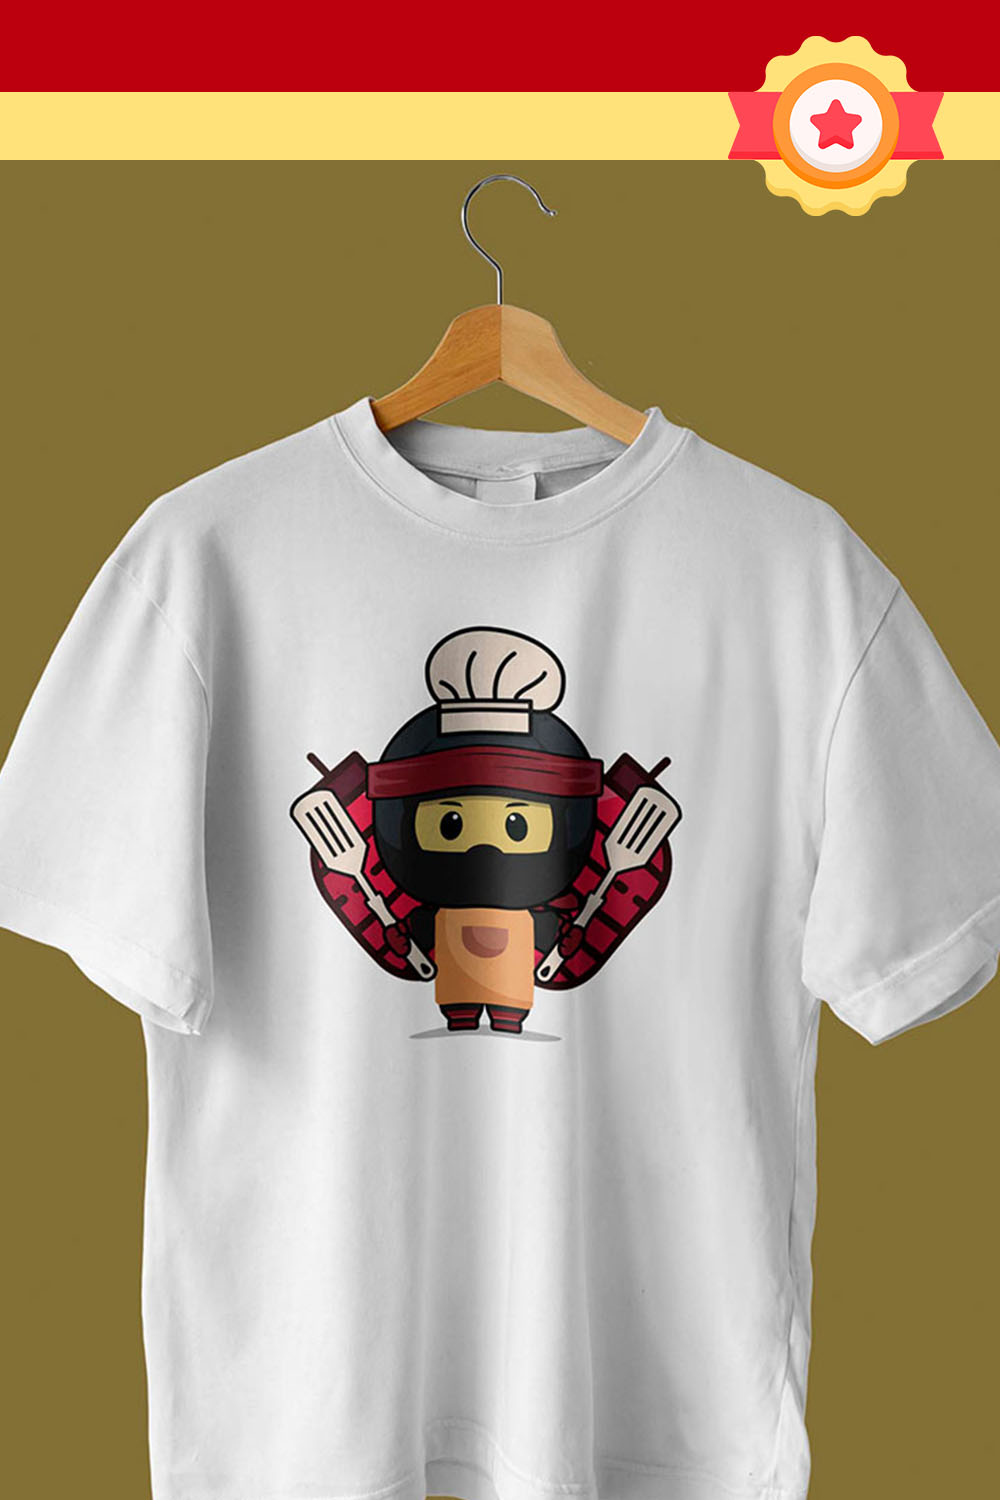 Ninja Cooking T-shirt Design Pinterest Collage image.